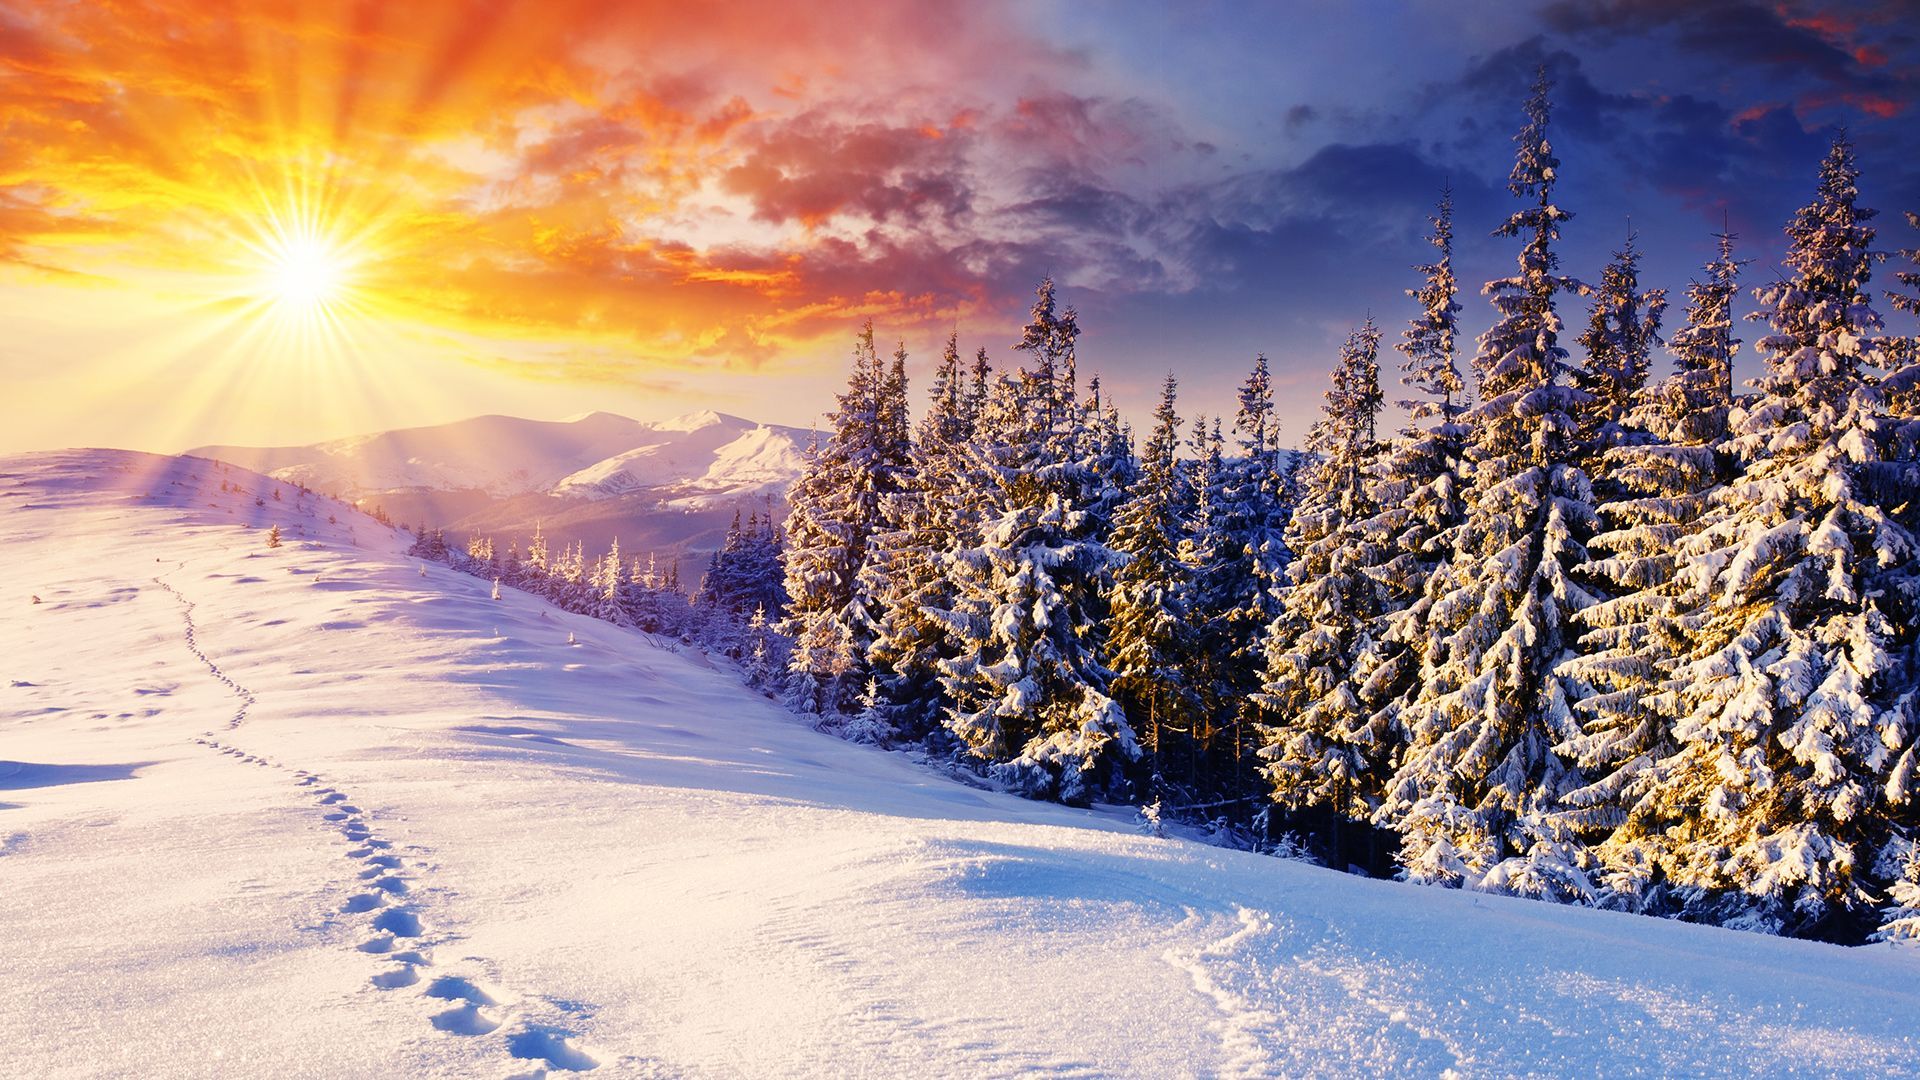 Winter HD Desktop Wallpapers - Top Free Winter HD Desktop